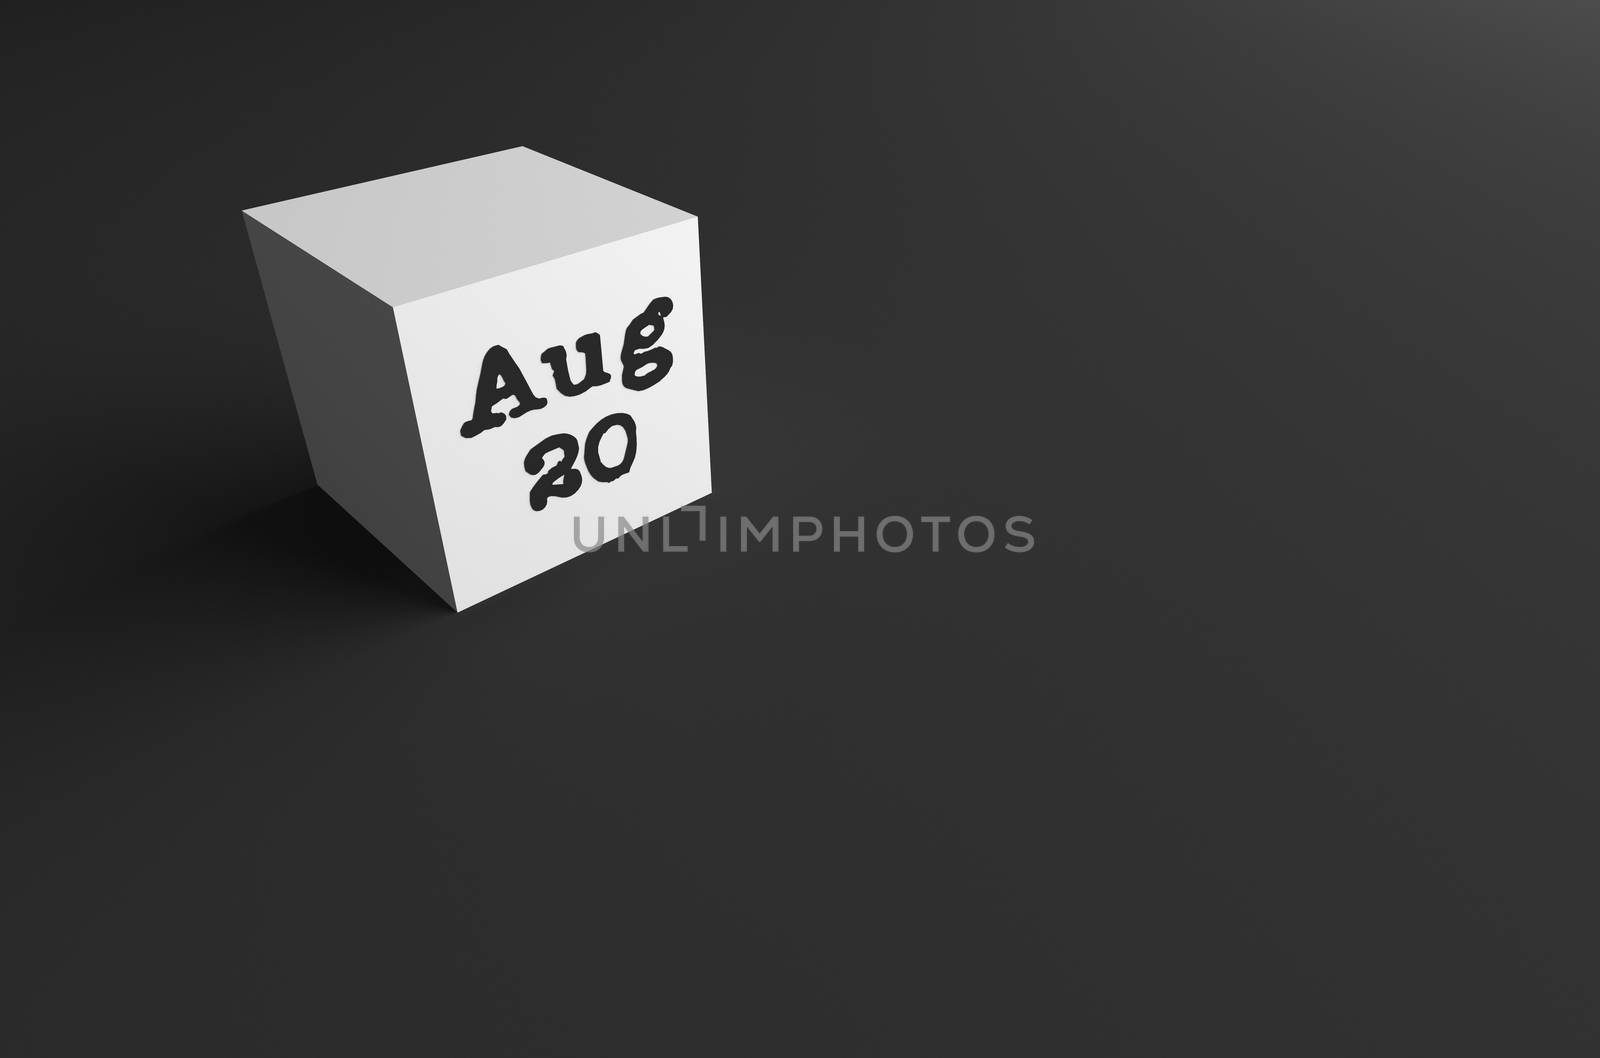 3D RENDERING OF Aug 20 by PrettyTG